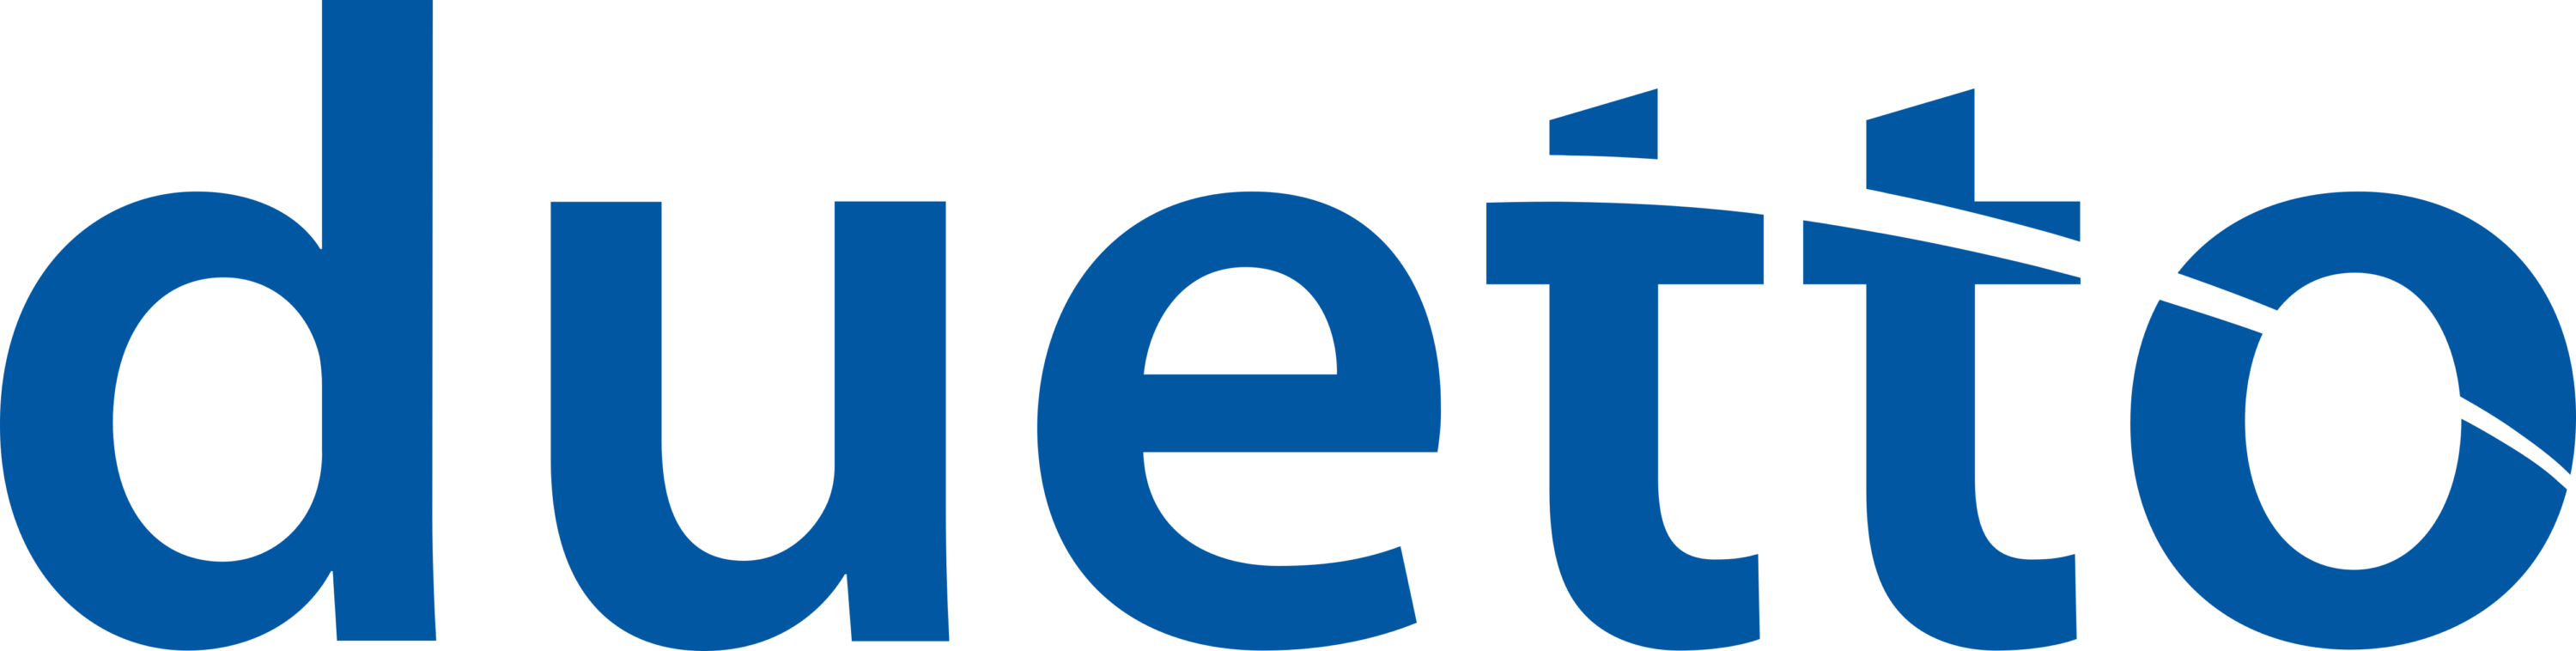 Duetto Research Logo